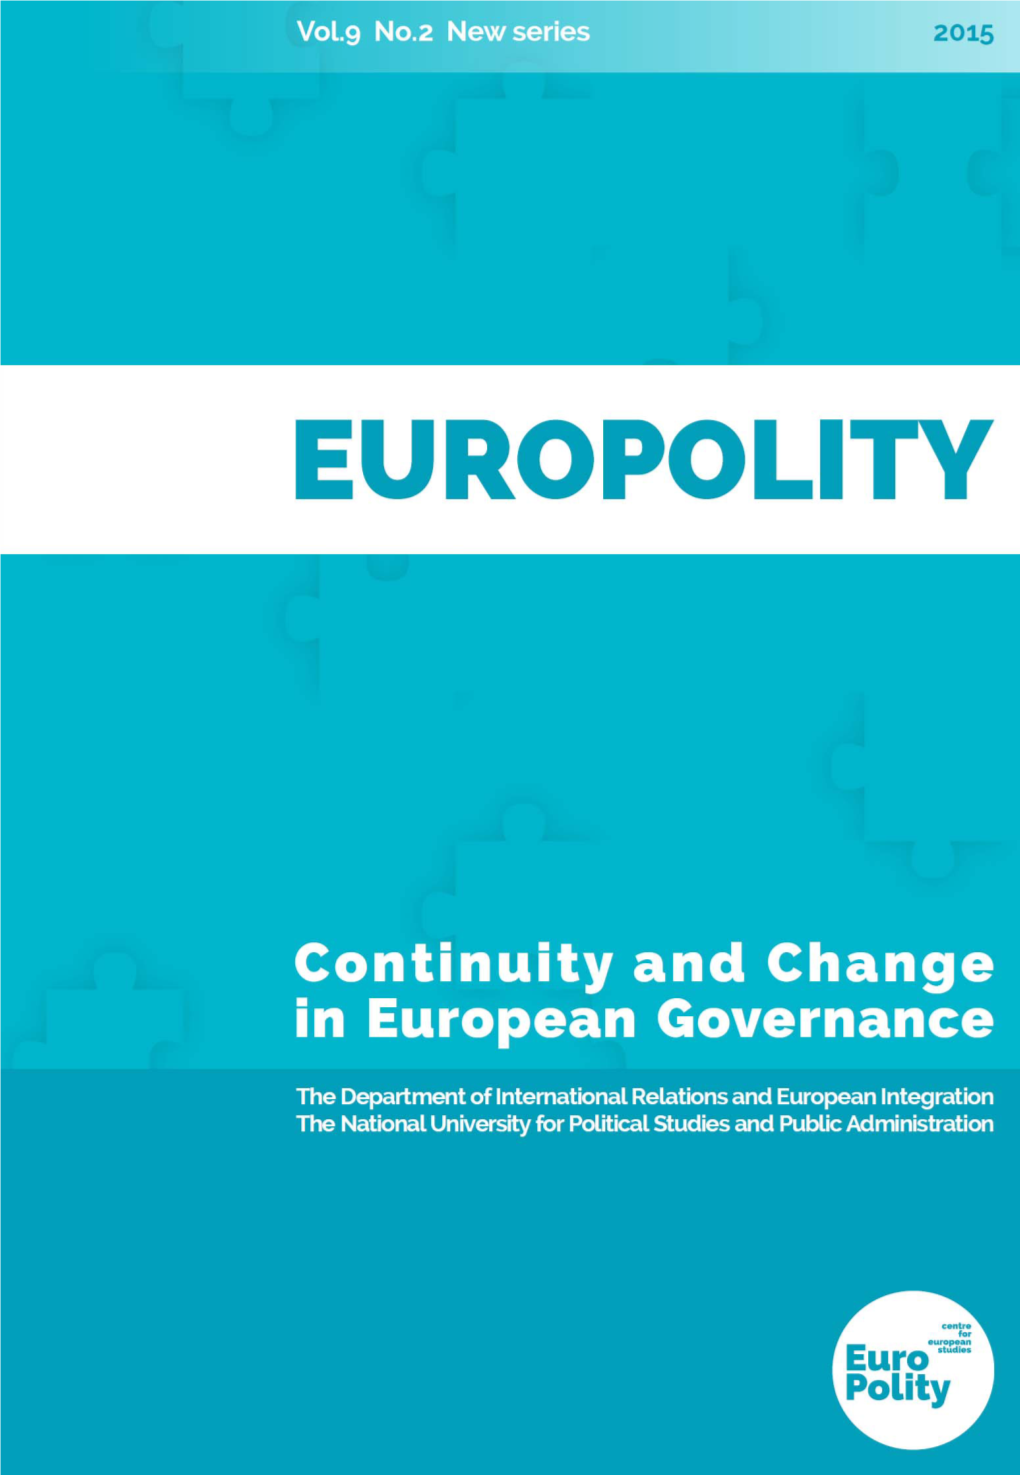 EUROPOLITY, Vol. 9, No. 2, 2015